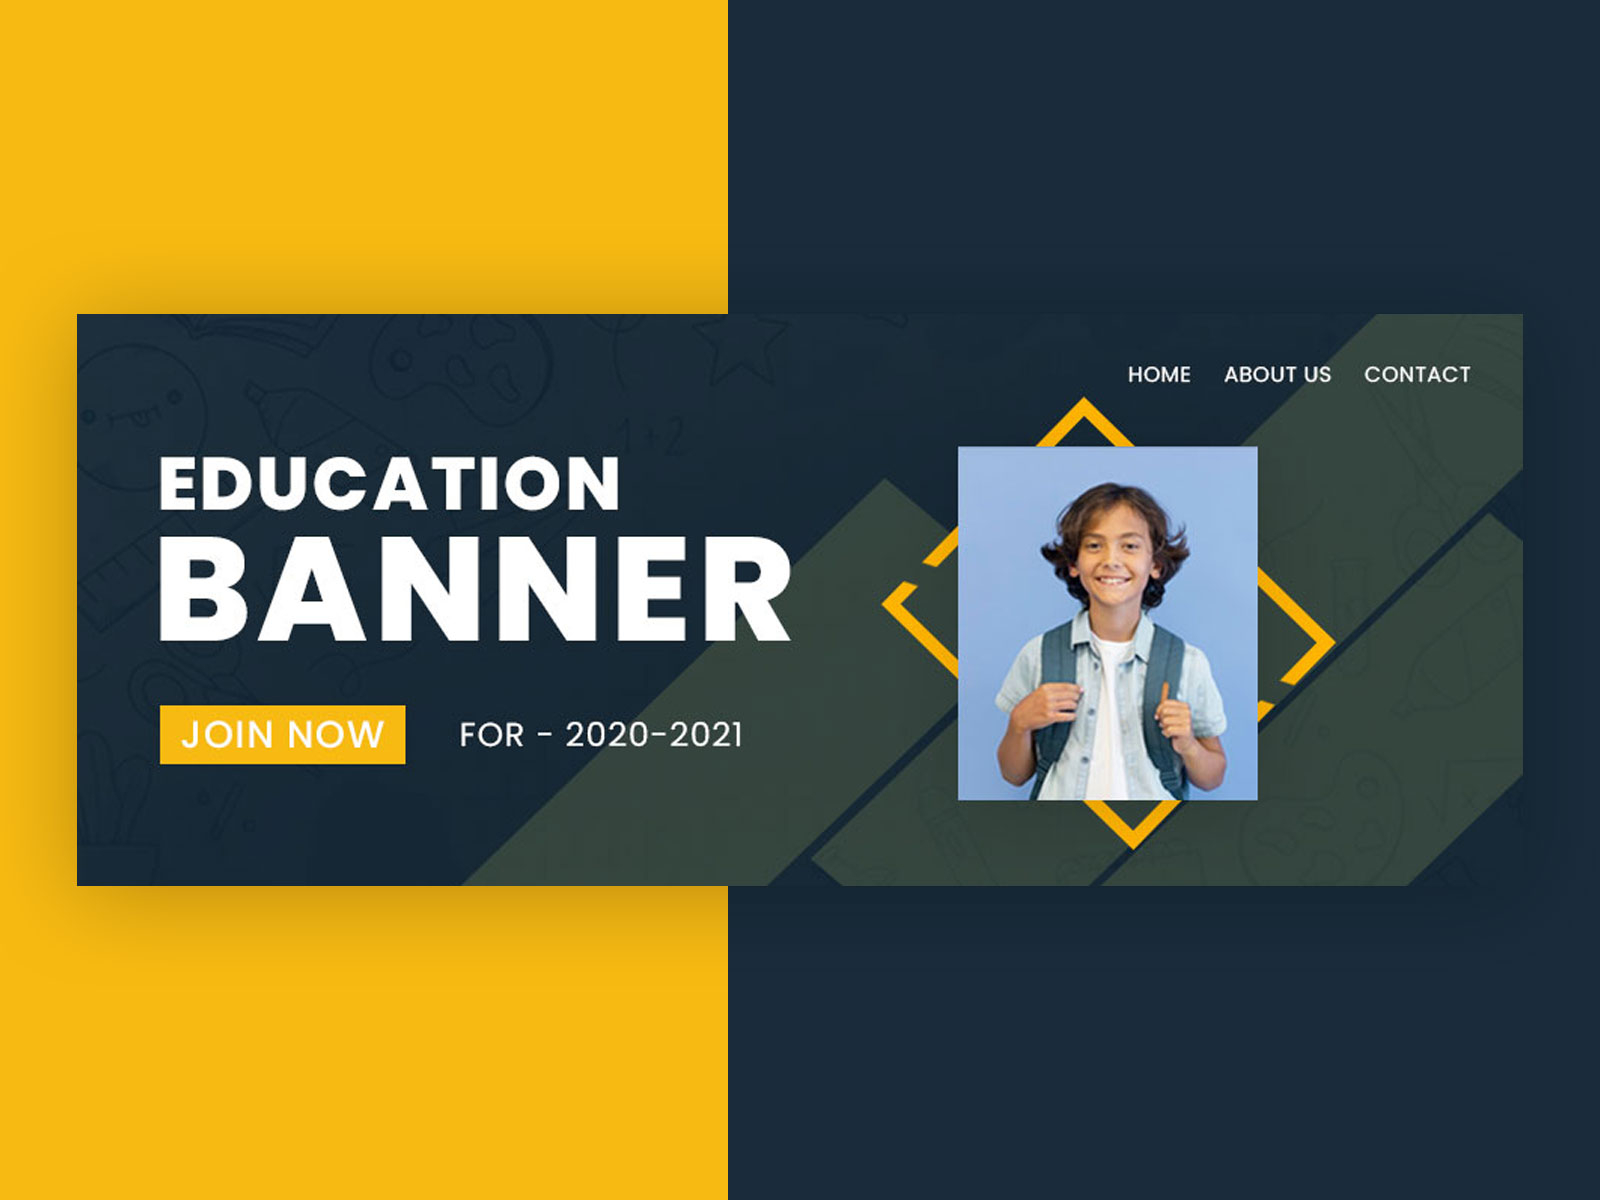 Education web banner design by Md Sajib Hossain on Dribbble